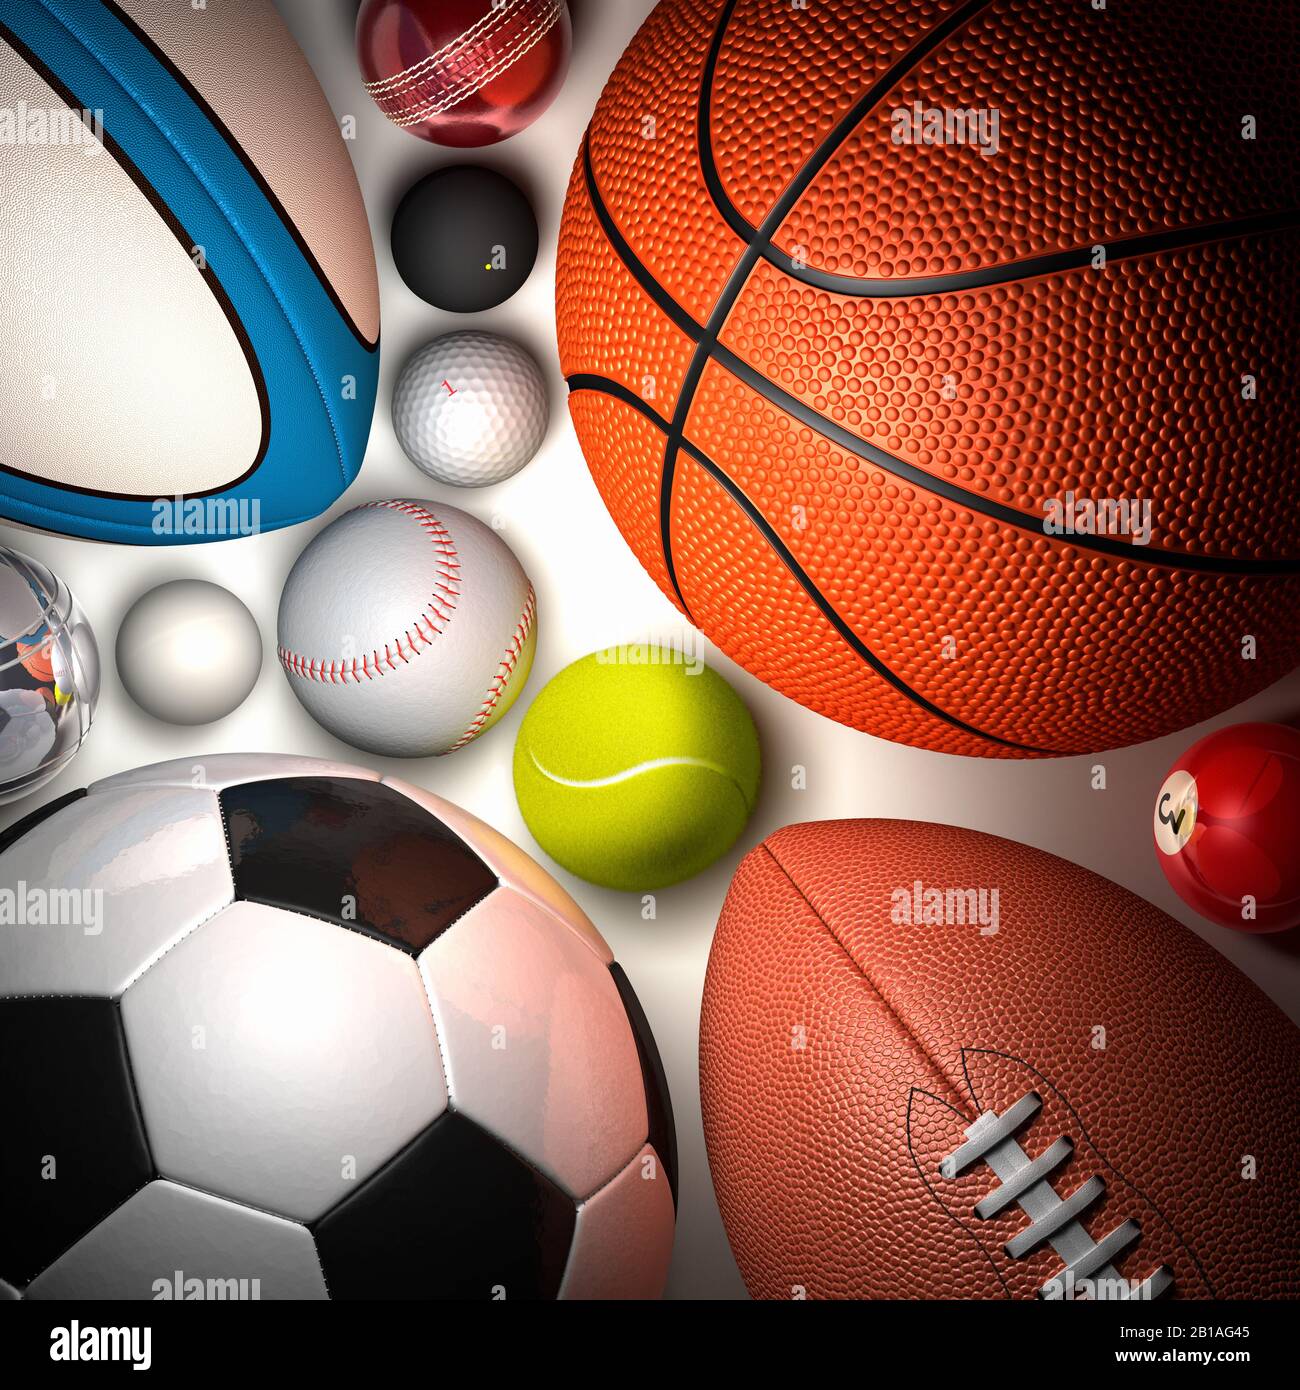 Bolas de varios deportes disparadas desde arriba. Familia de bolas. Fútbol, baloncesto, tenis, rugby, béisbol, grotball, golf, squash, petanca, piscina, tenis de mesa Foto de stock